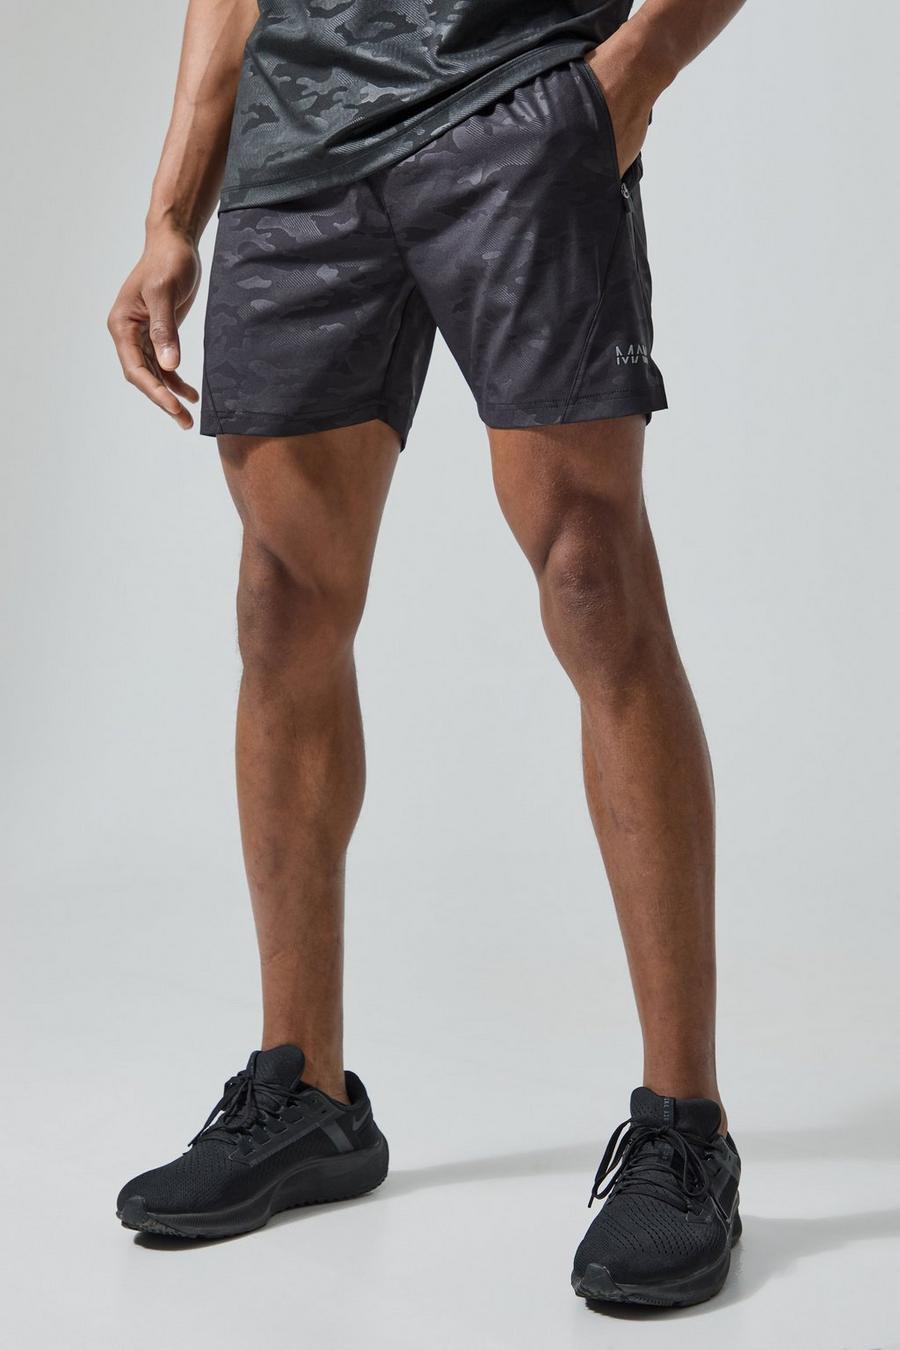 Pantaloncini Man Active da 12 cm in fantasia militare, Black